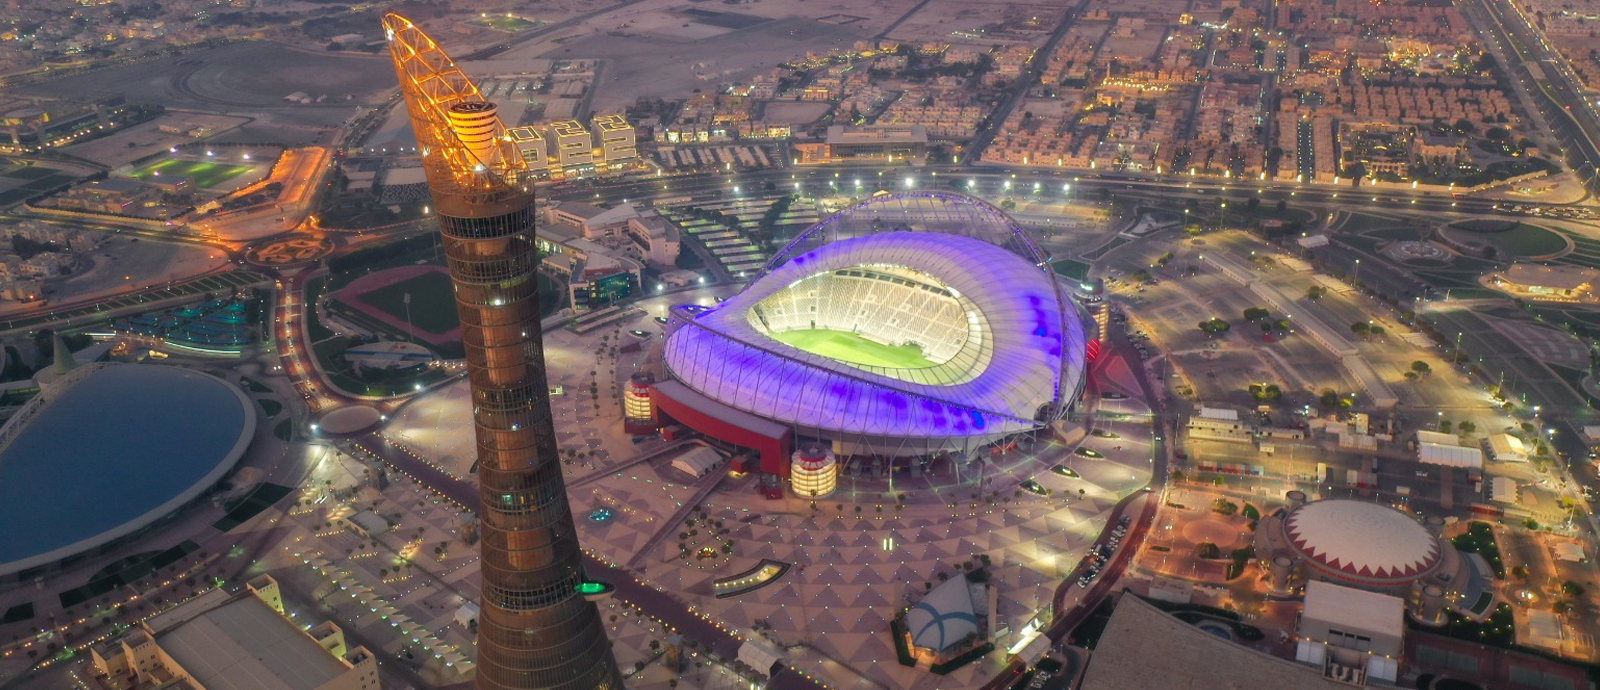 Qatar is sports capital of the world